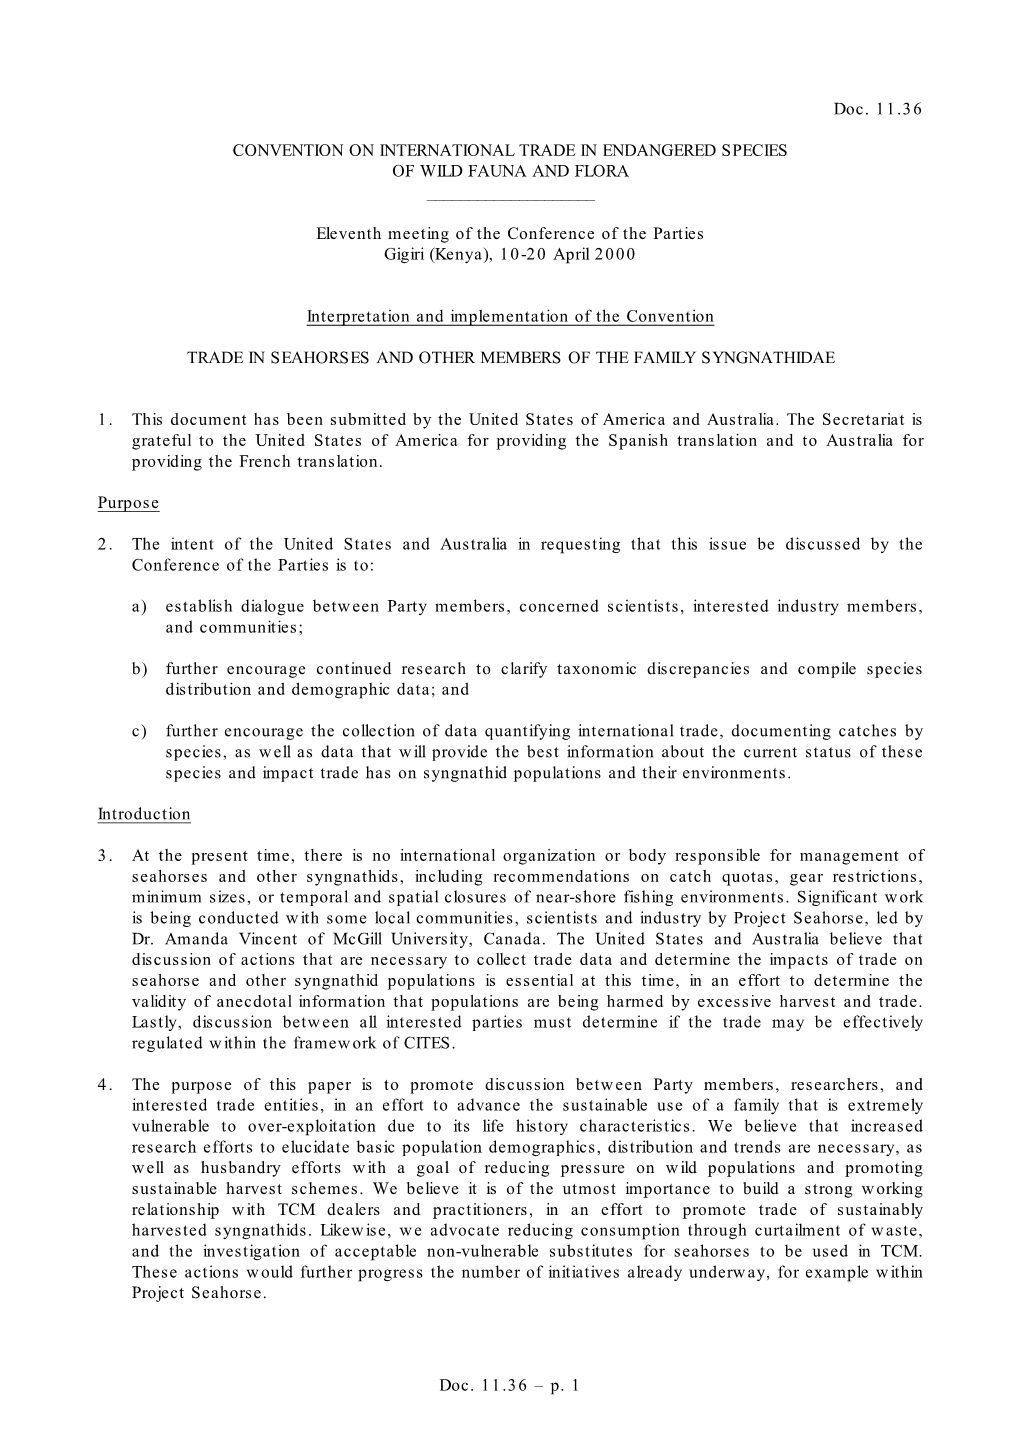 P. 1 Doc. 11.36 CONVENTION on INTERNATIONAL TRADE